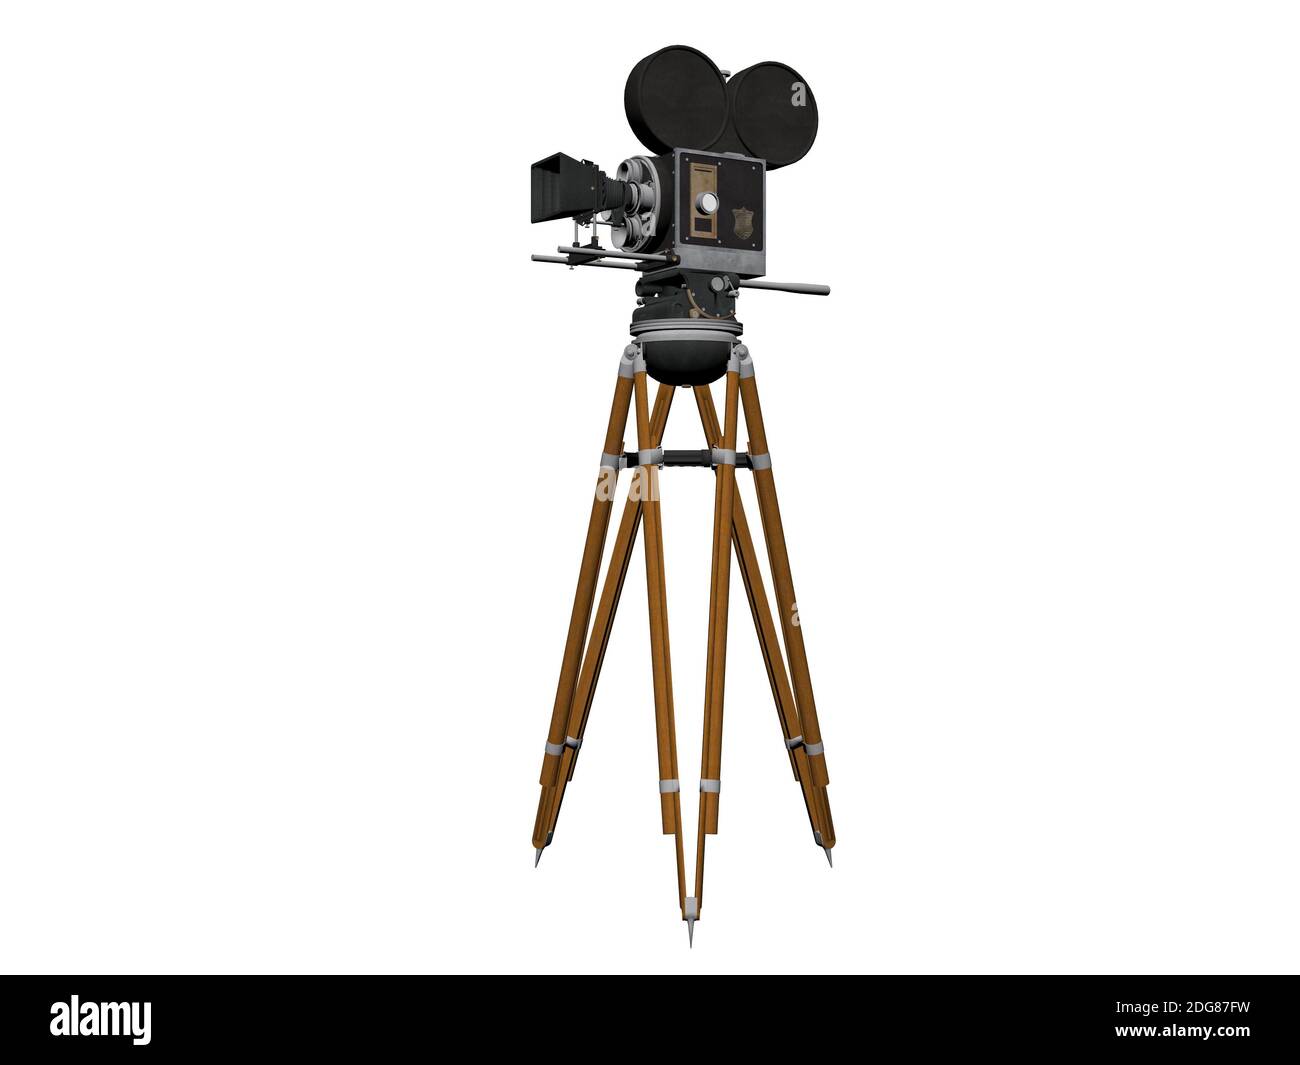 Vintage-Filmkamera auf Stativ - 3d-Rendering Stockfotografie - Alamy